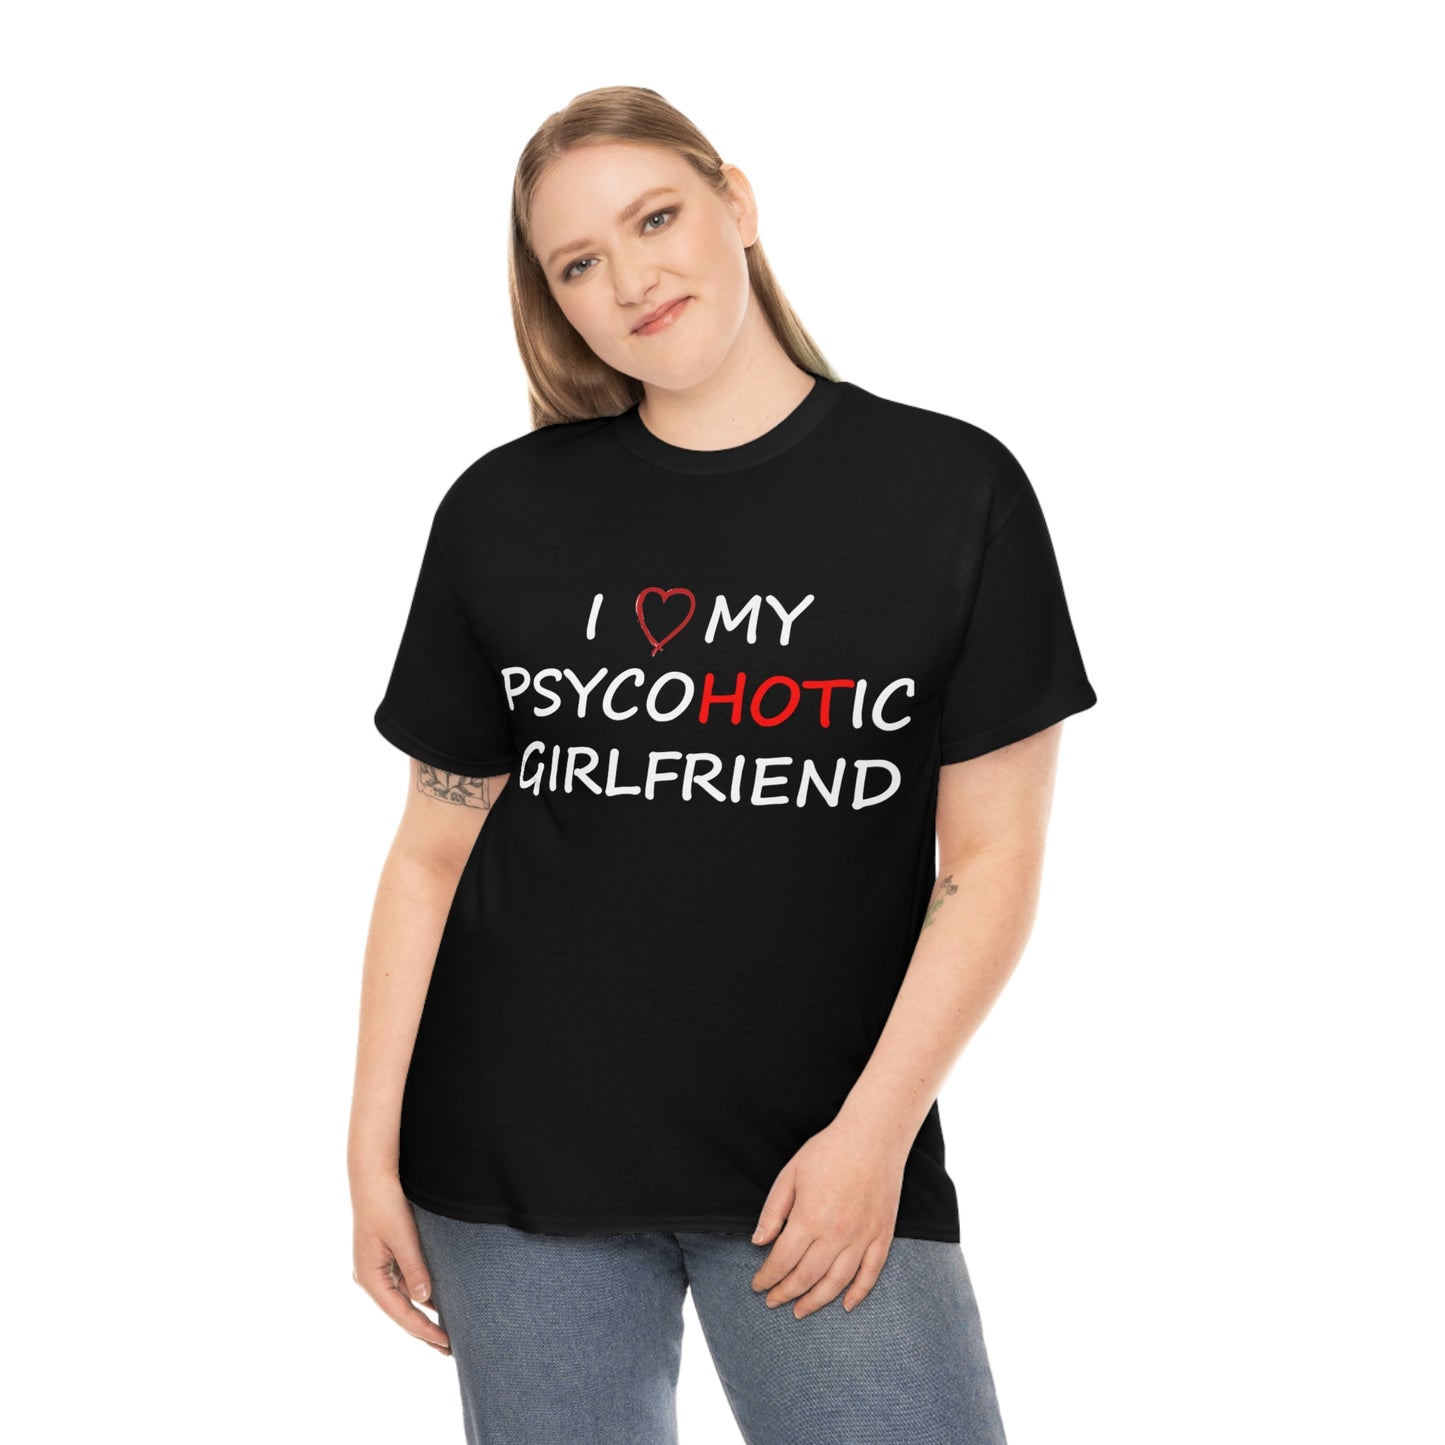 I love my psychotic girlfriend Tshirt